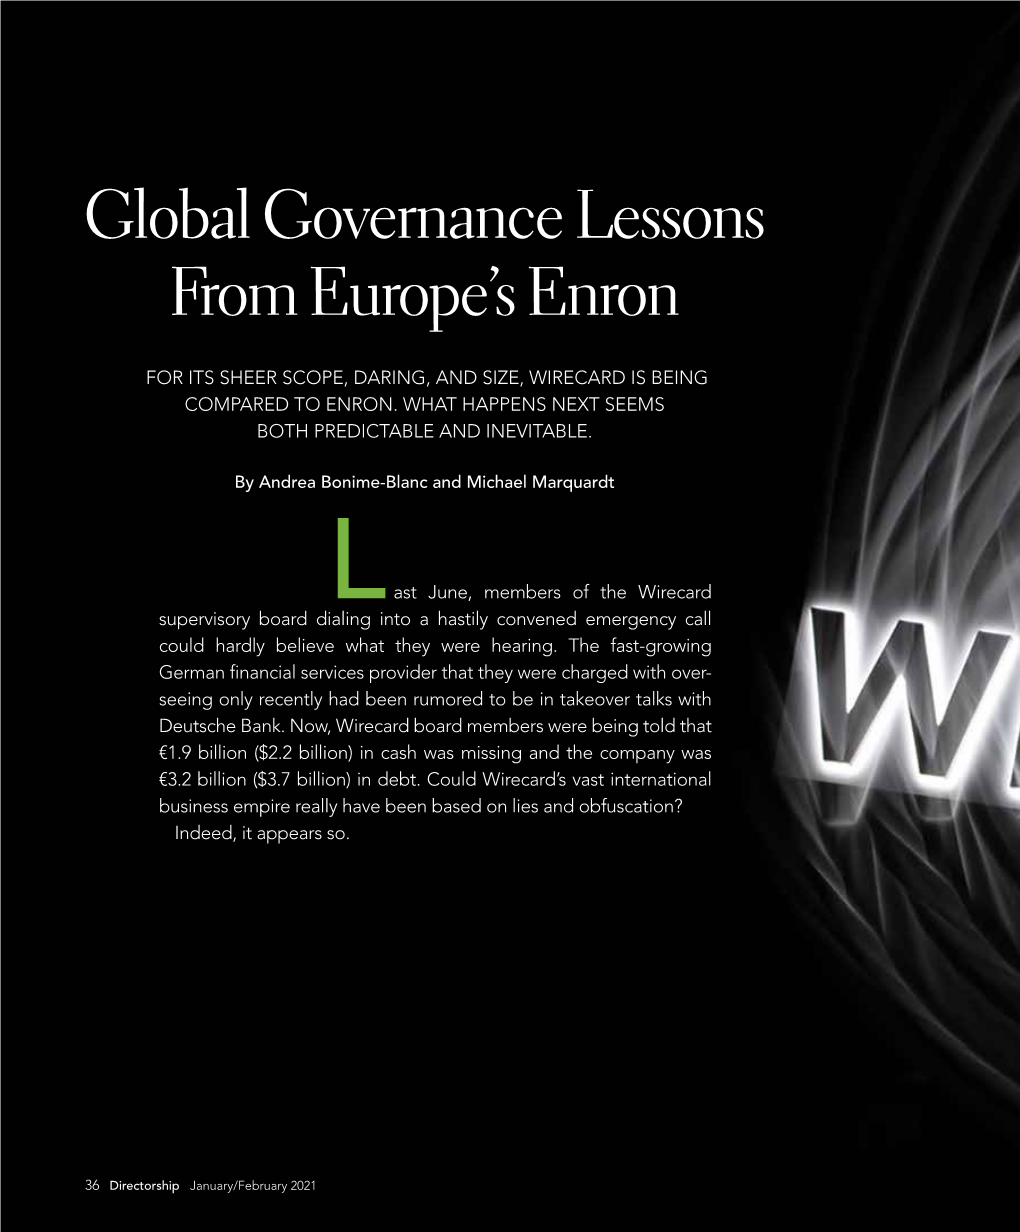 Global Governance Lessons from Europe's Enron